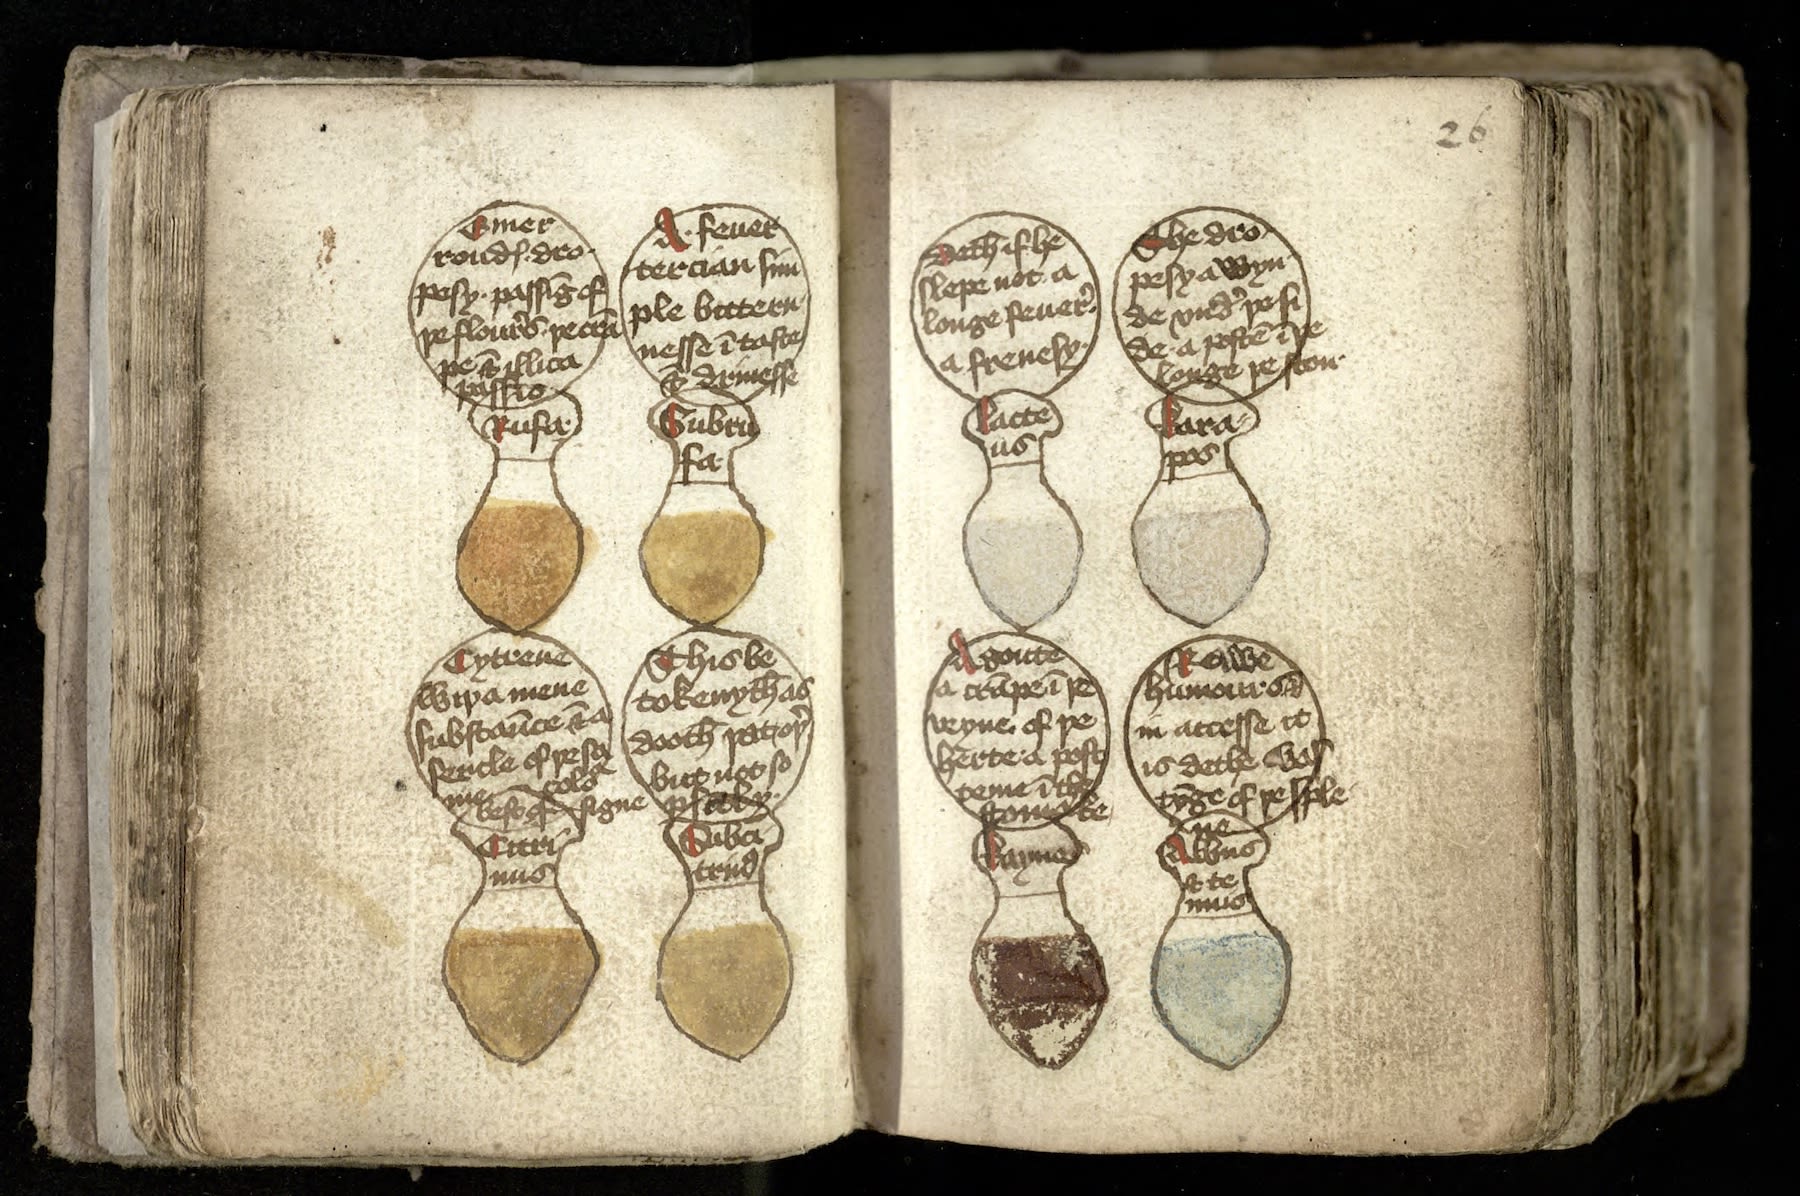 Cambridge medieval medical texts digitized